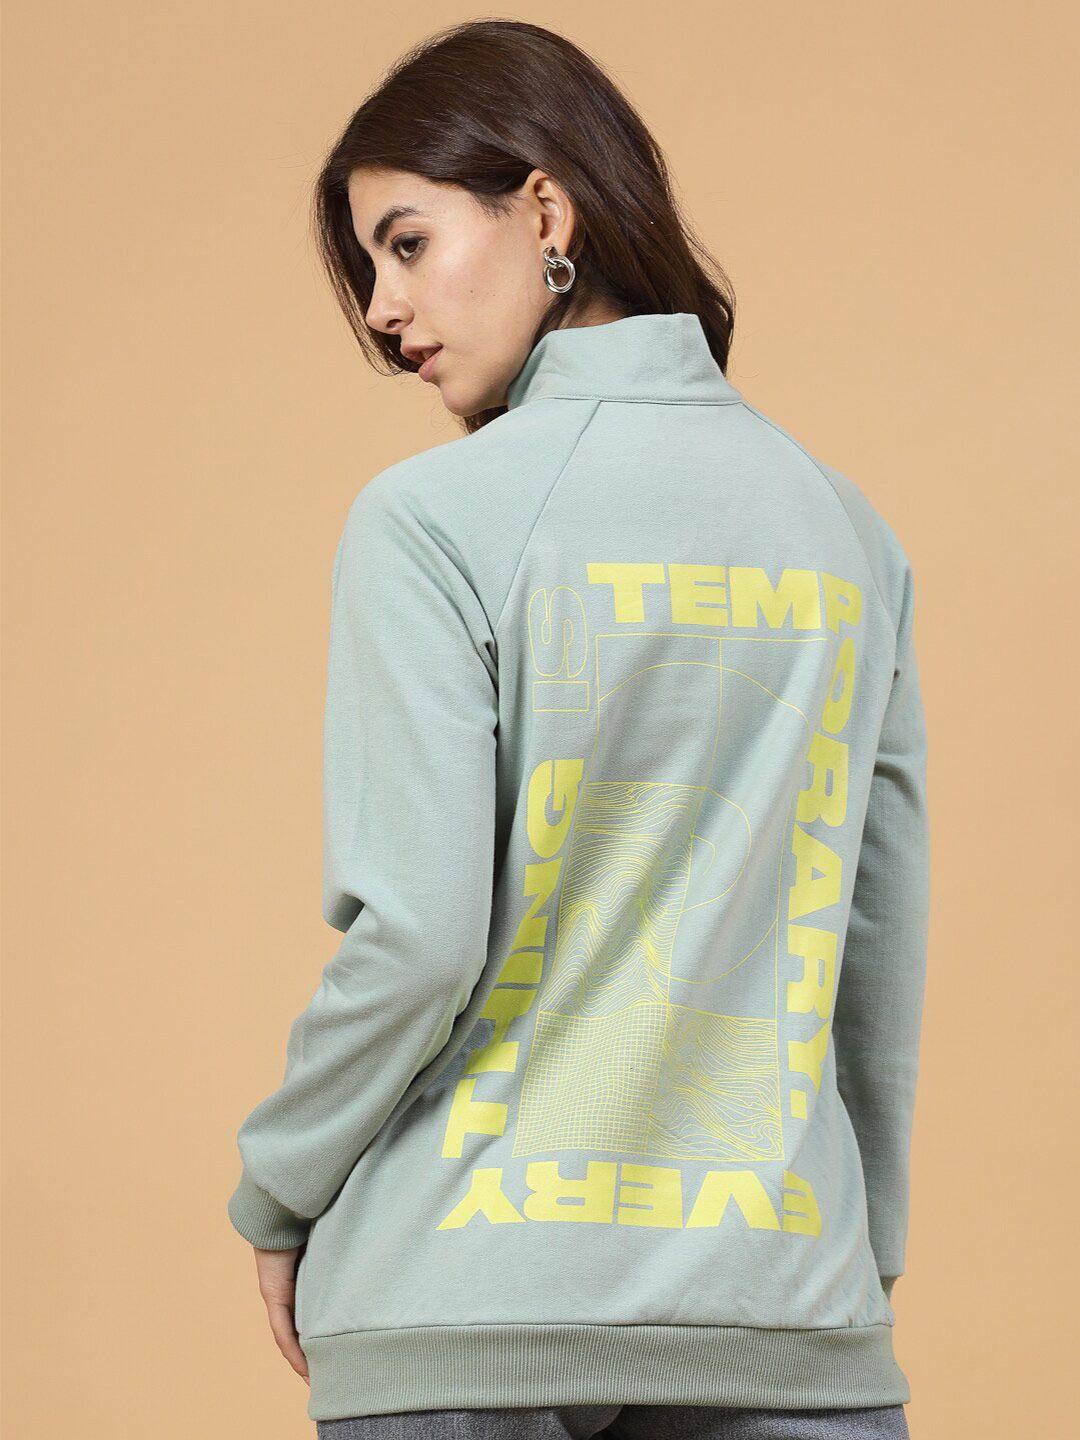 rigo typography printed mock collar fleece oversized pullover sweatshirt